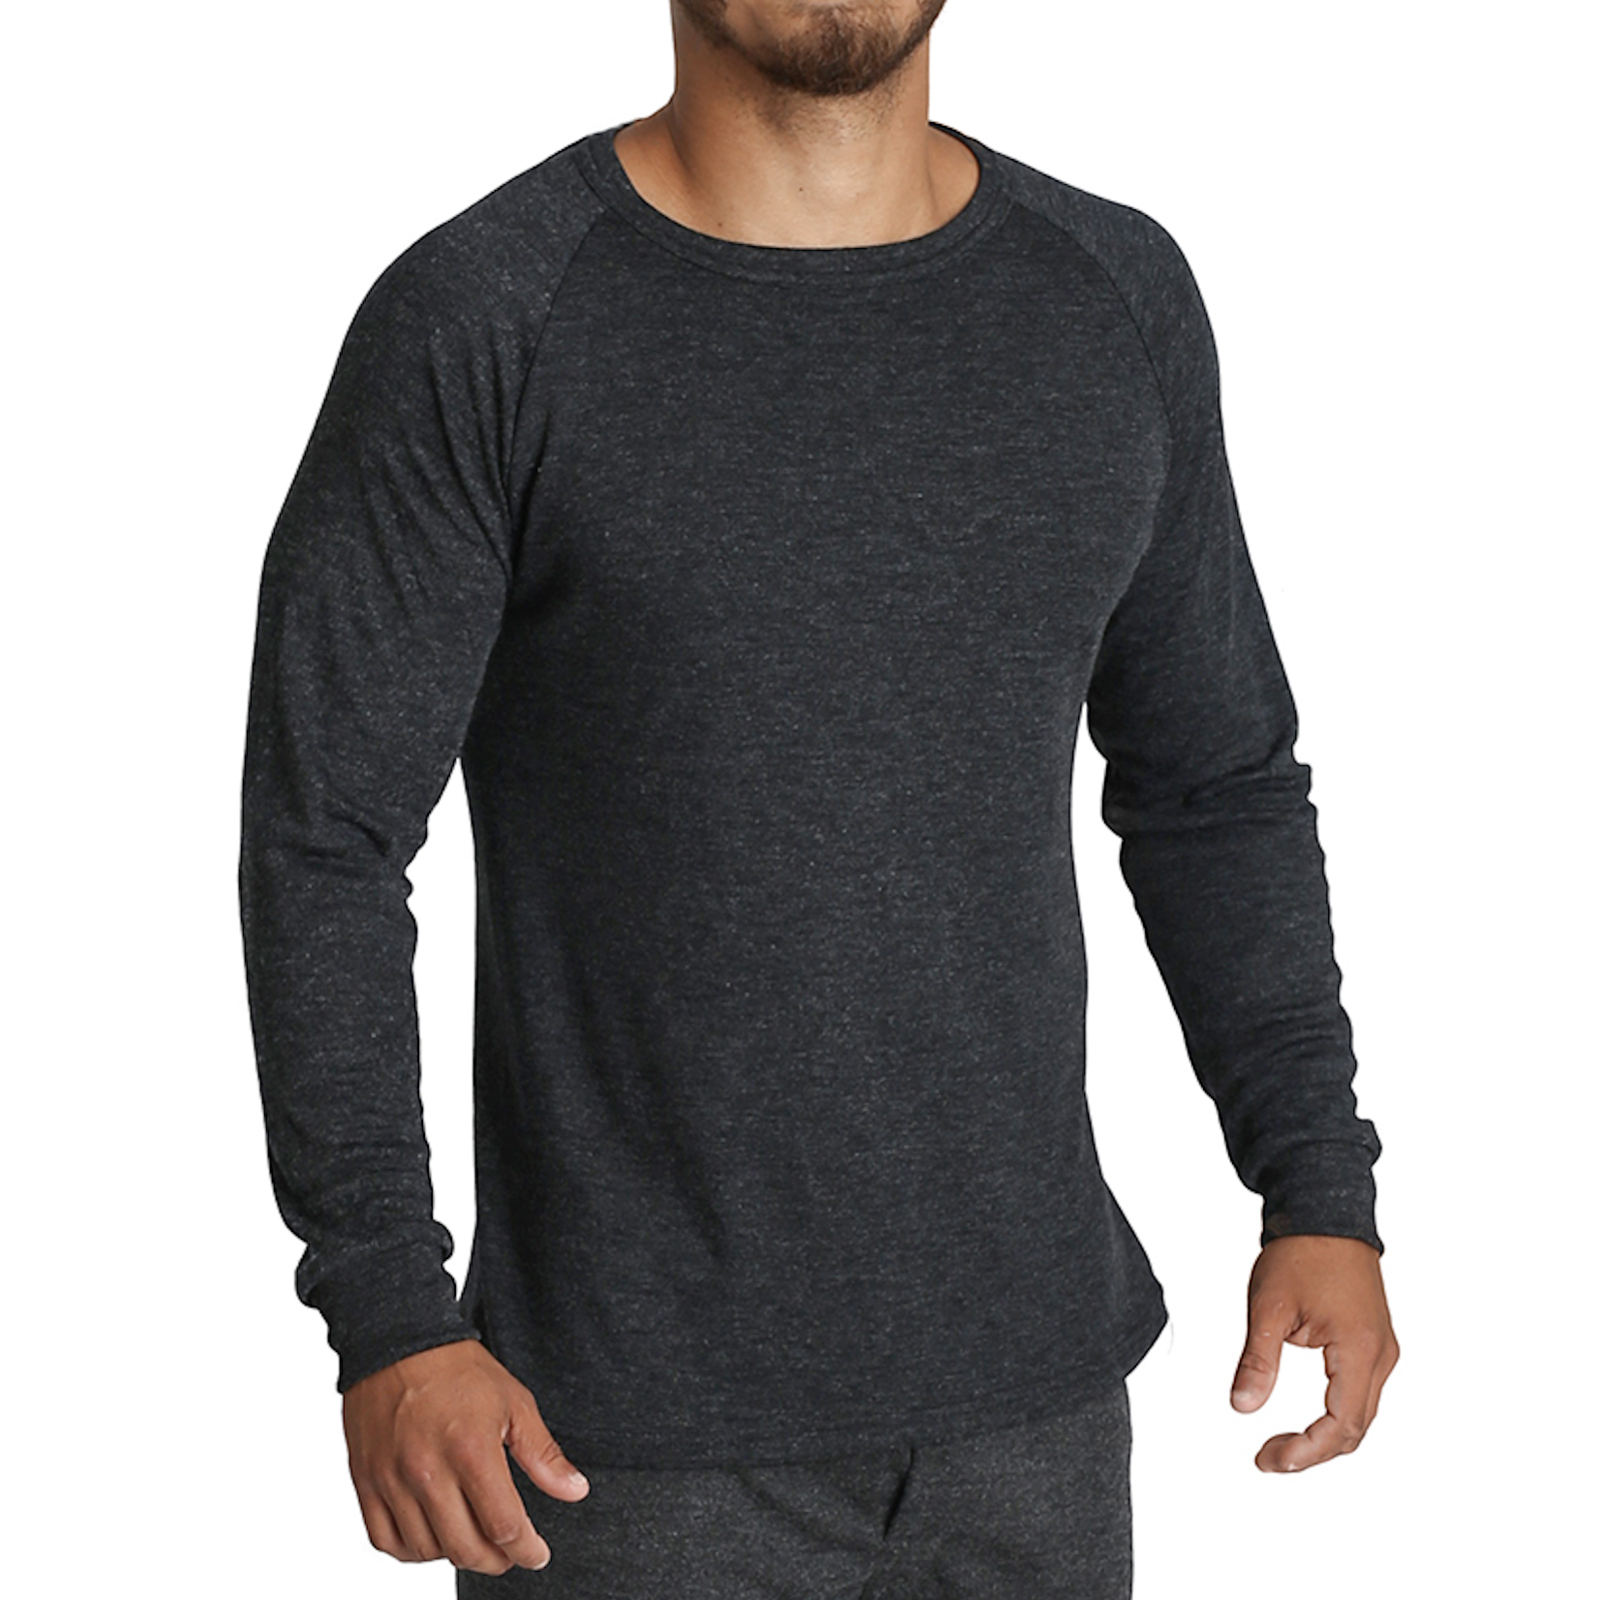 Men's Merino Wool Blend Long Sleeve Thermal Top Underwear Thermals Base Layer eBay